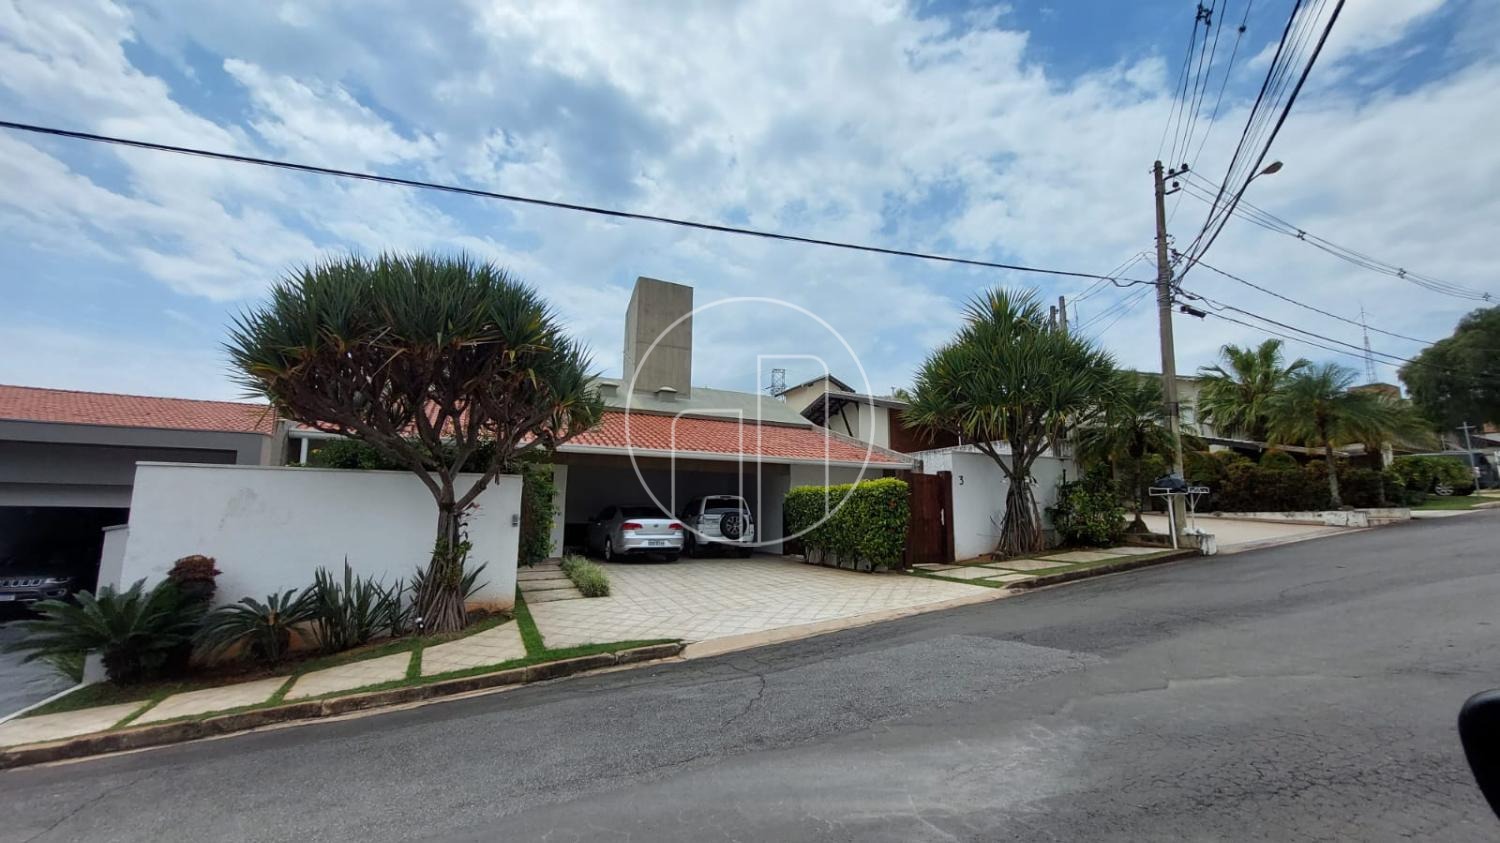 Piccoloto - Casa à venda no Iguatemi em Campinas